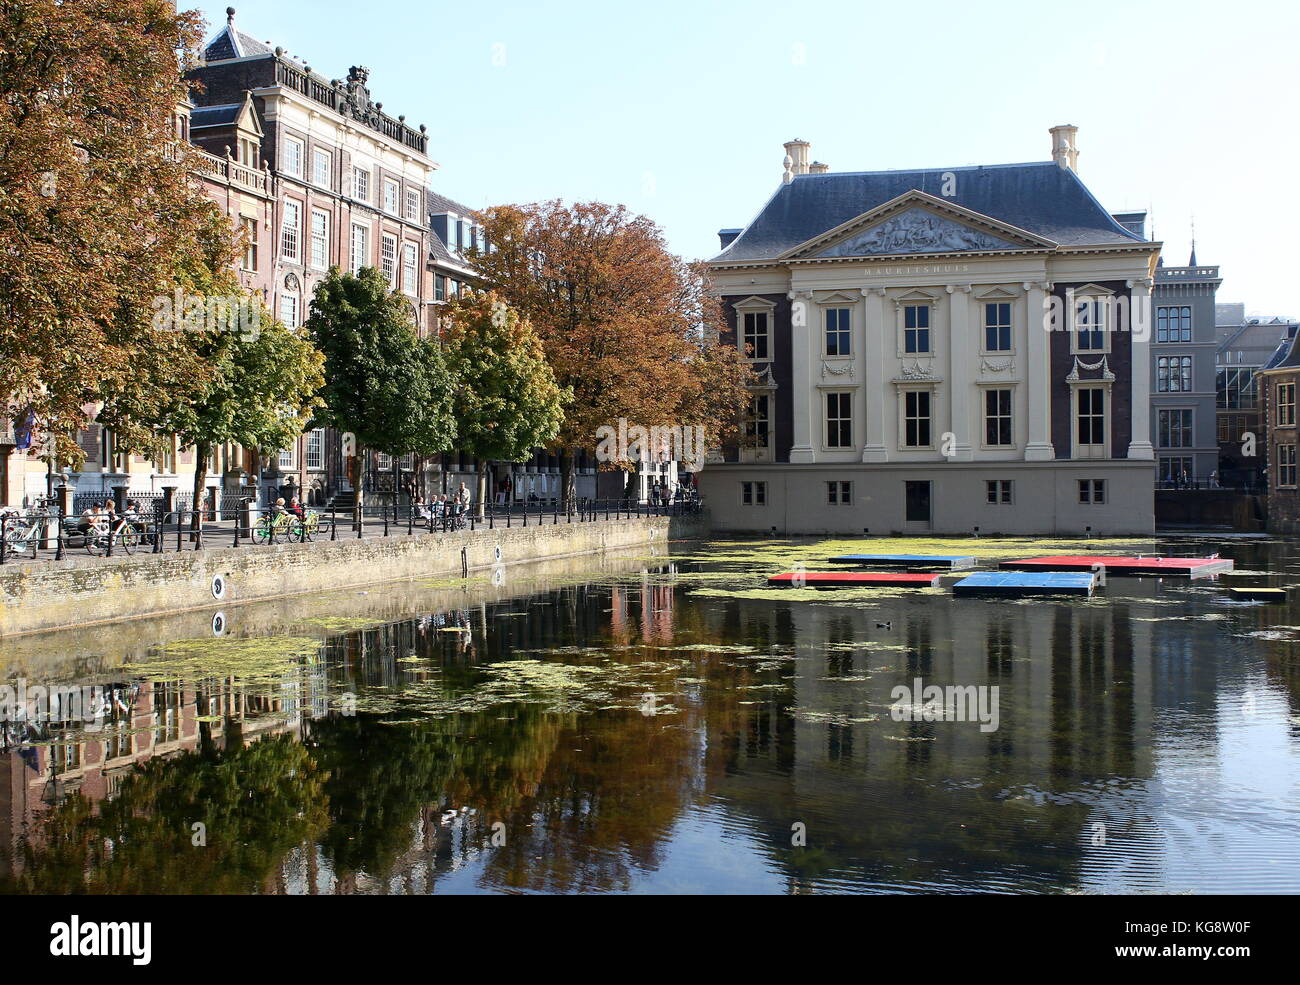 Hofvijver Pond wan Art museum Mauritshuis, central The Hague (Den Haag), Netherlands.  Late summer 2017 Stock Photo